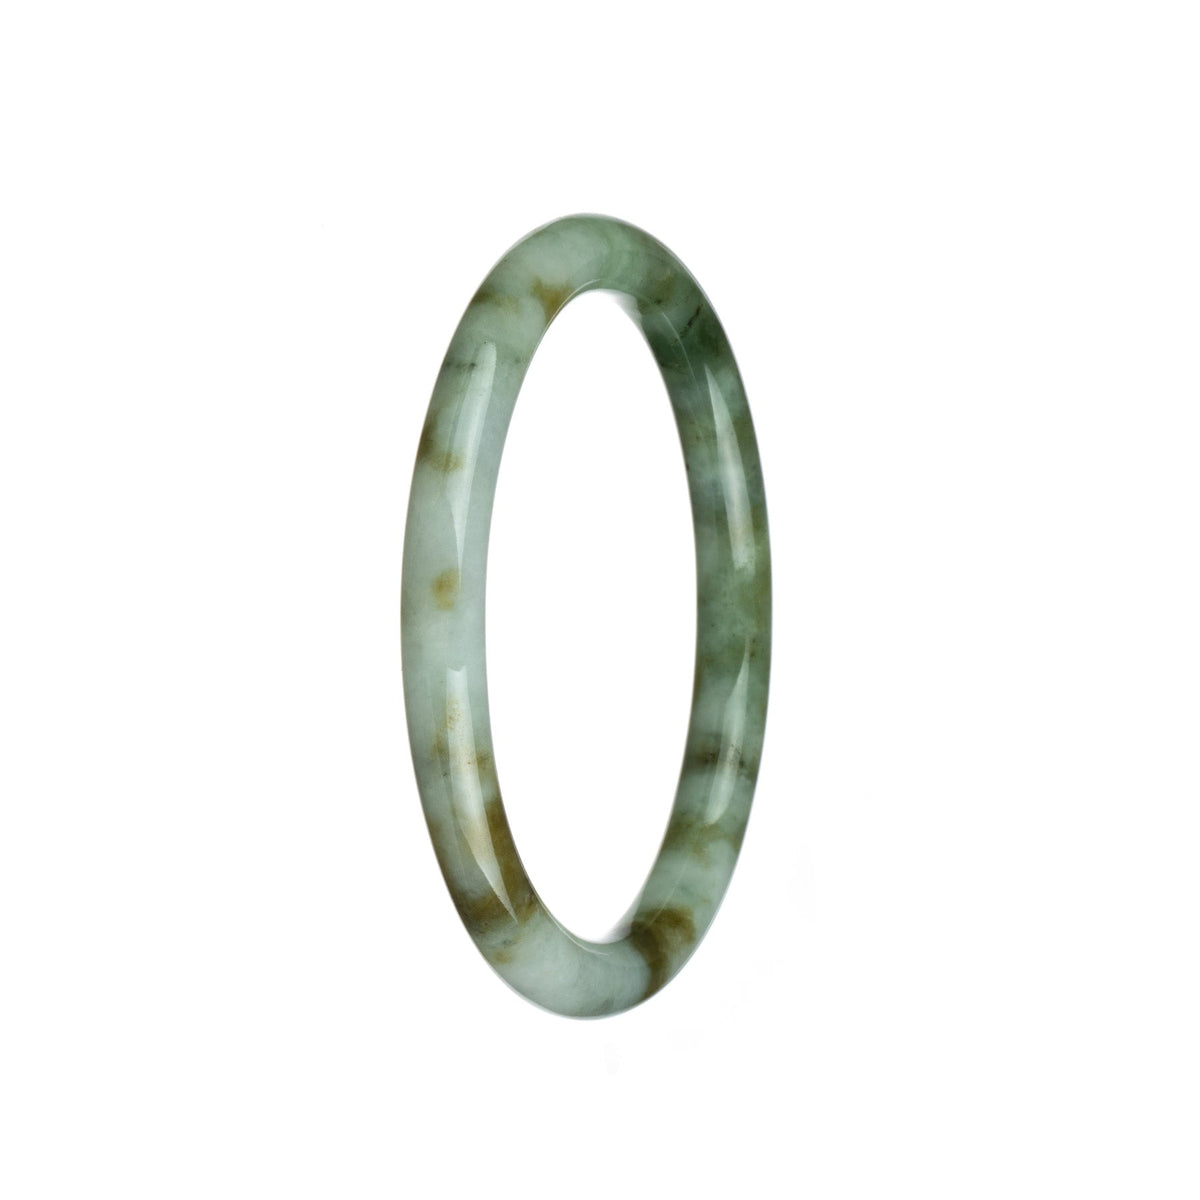 Real Type A Green White Brown Pattern Burma Jade Bangle Bracelet - 60mm Petite Round